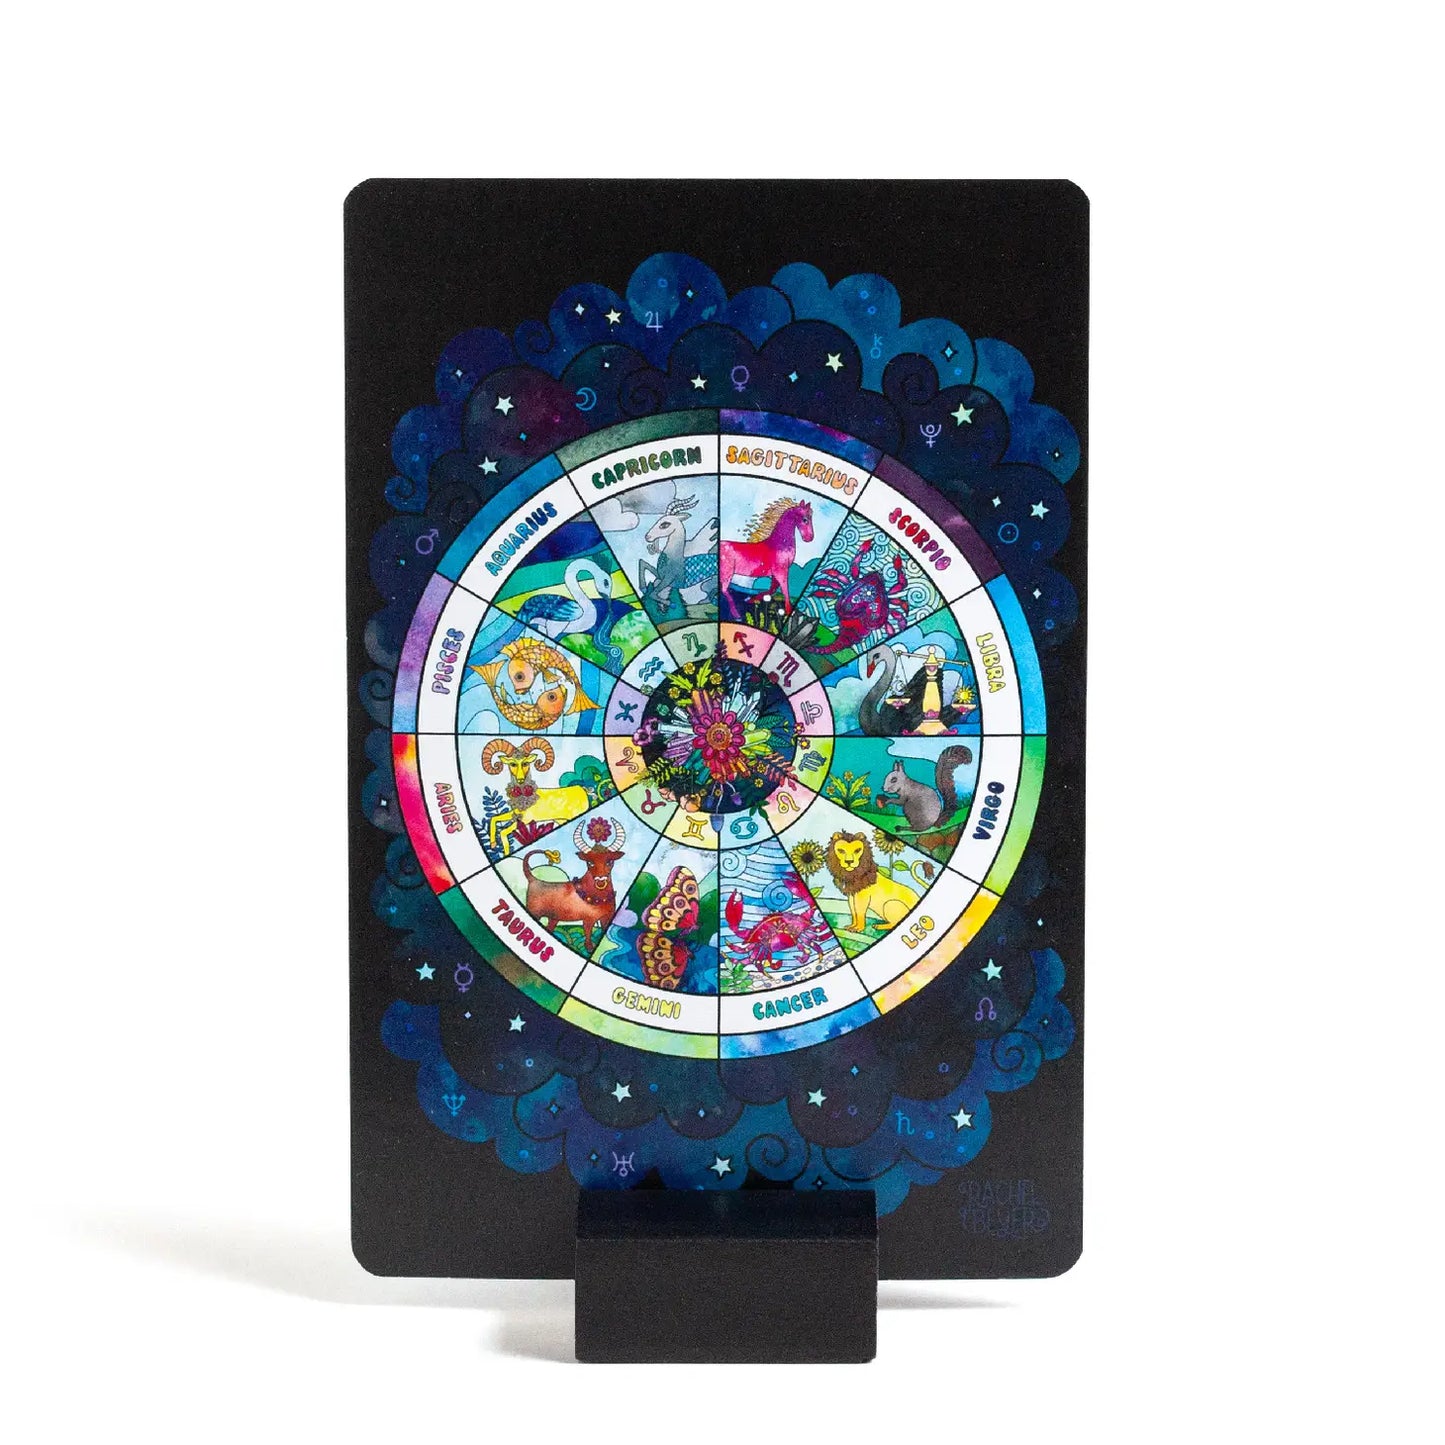 Astrology Wheel Mini Art Print 4x6 - Moon Room Shop and Wellness